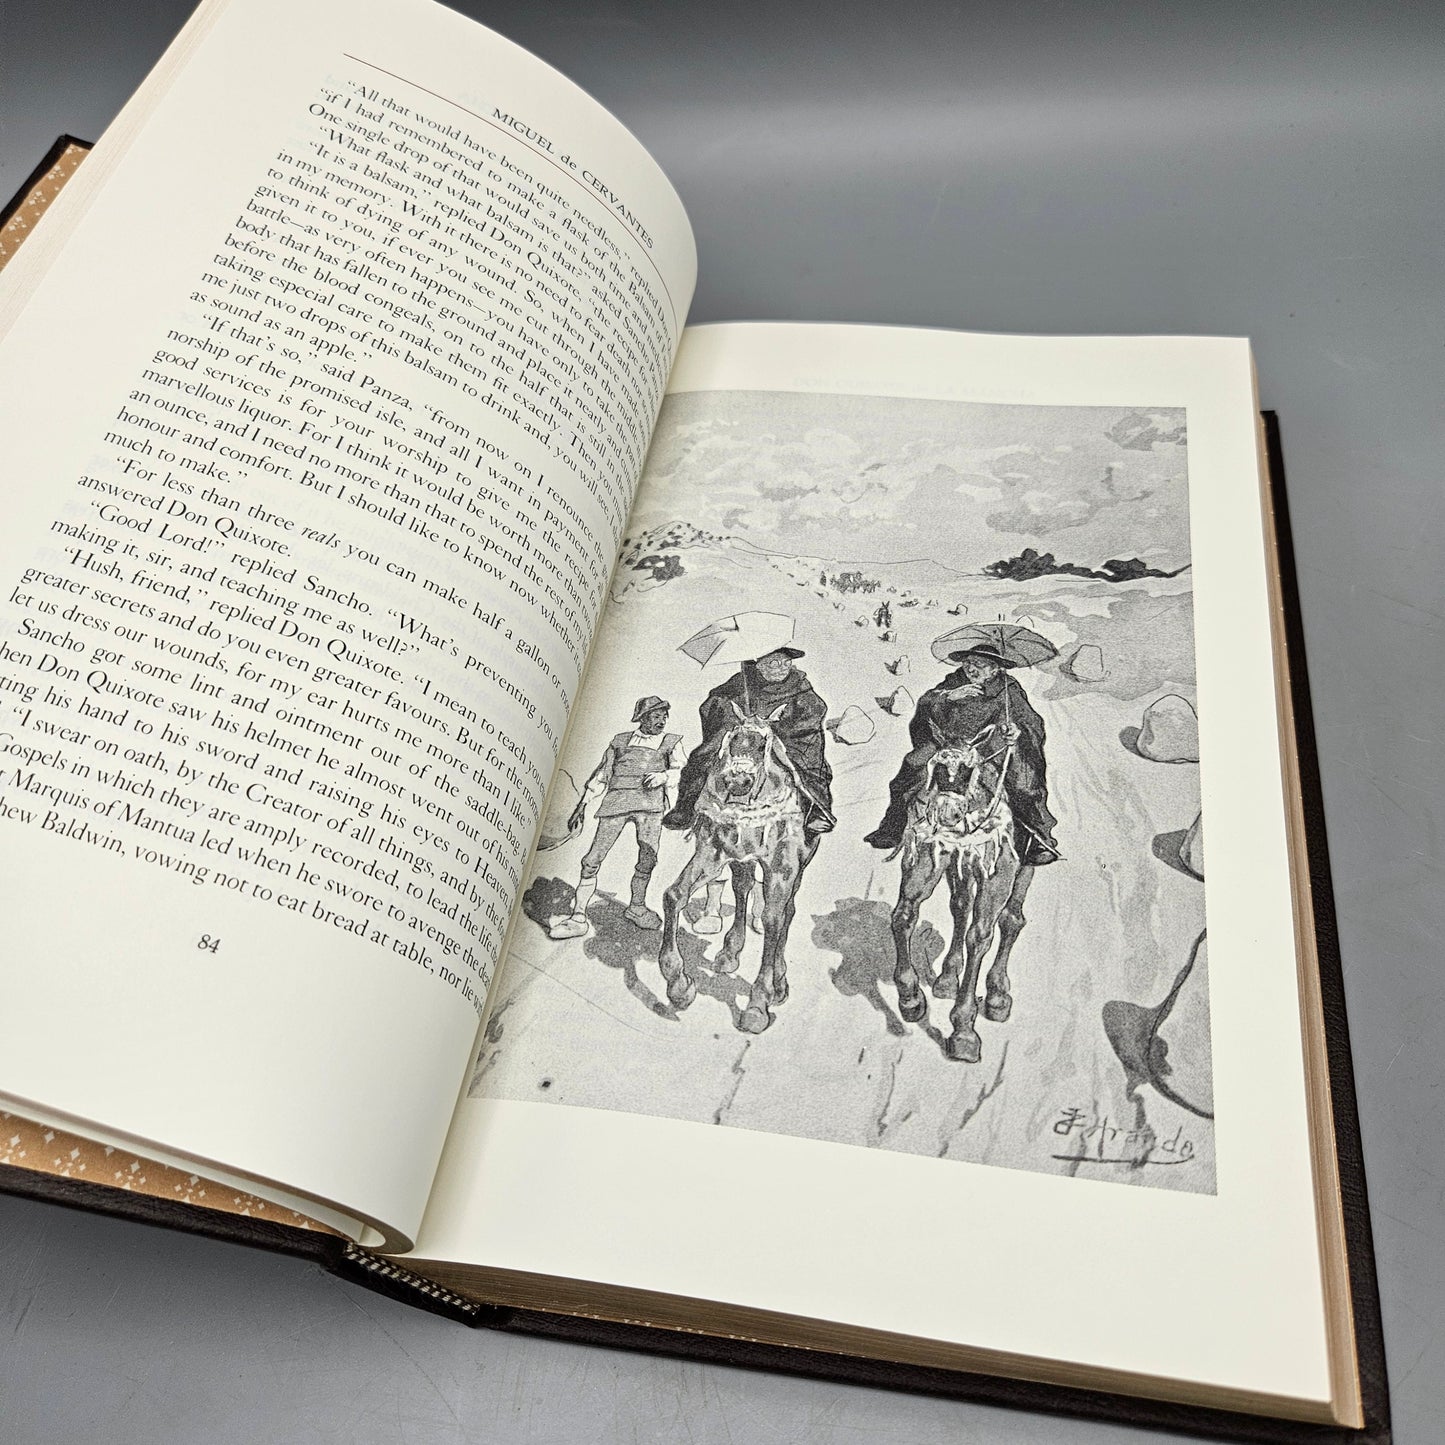 Leatherbound Book - Cervantes "Don Quixote" Franklin Library